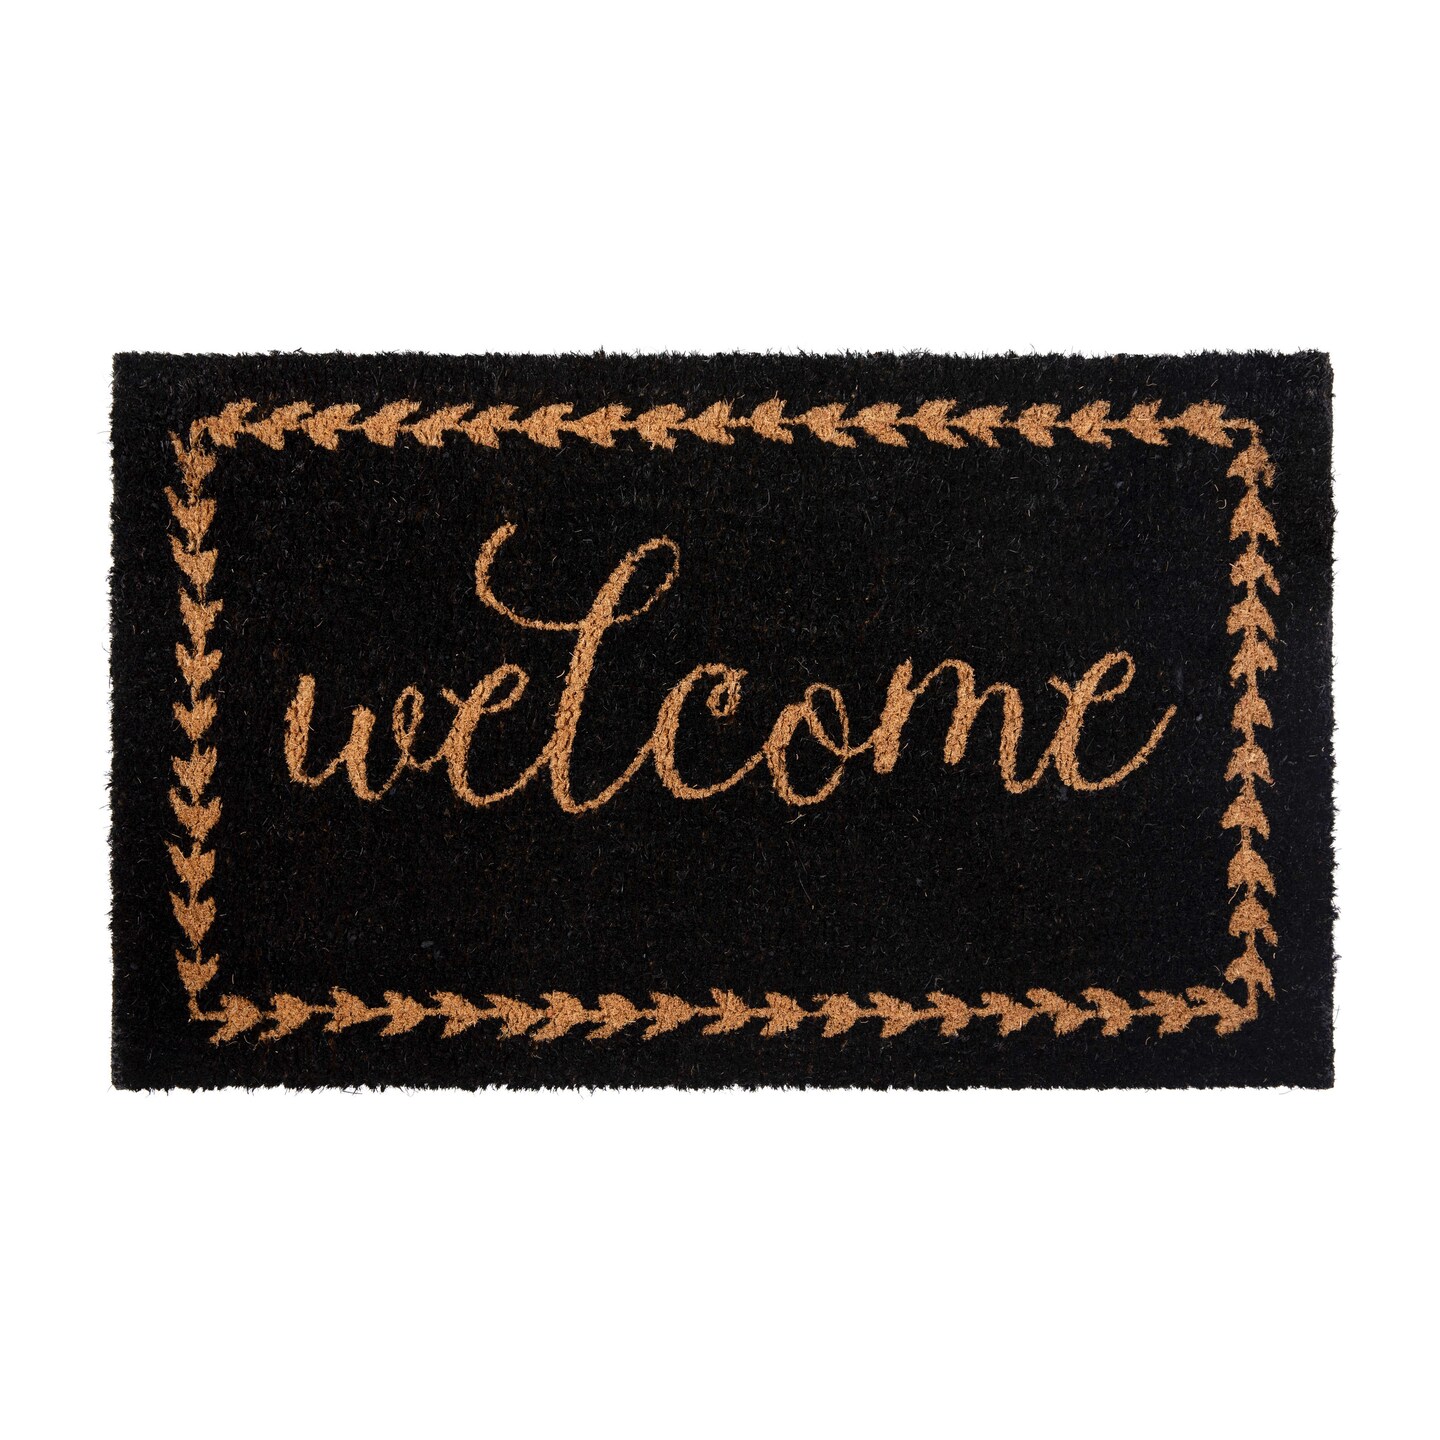 Welcome and Goodbye Doormat 18 x 30, Non-Slip, Durable